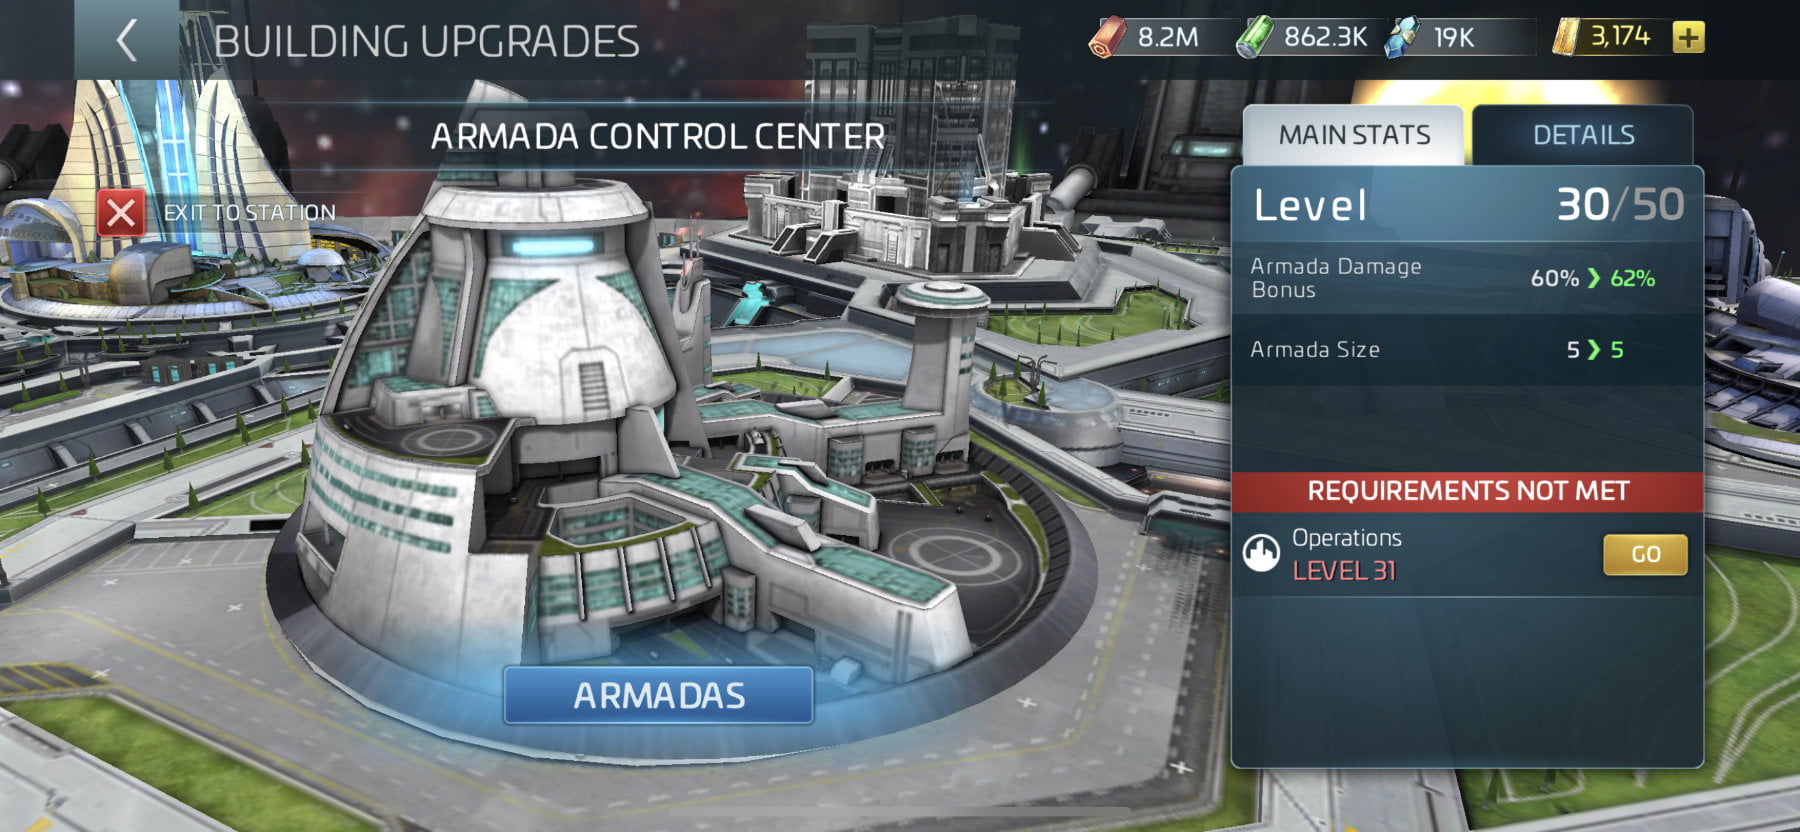 Star Trek Fleet Command Armada Control Center